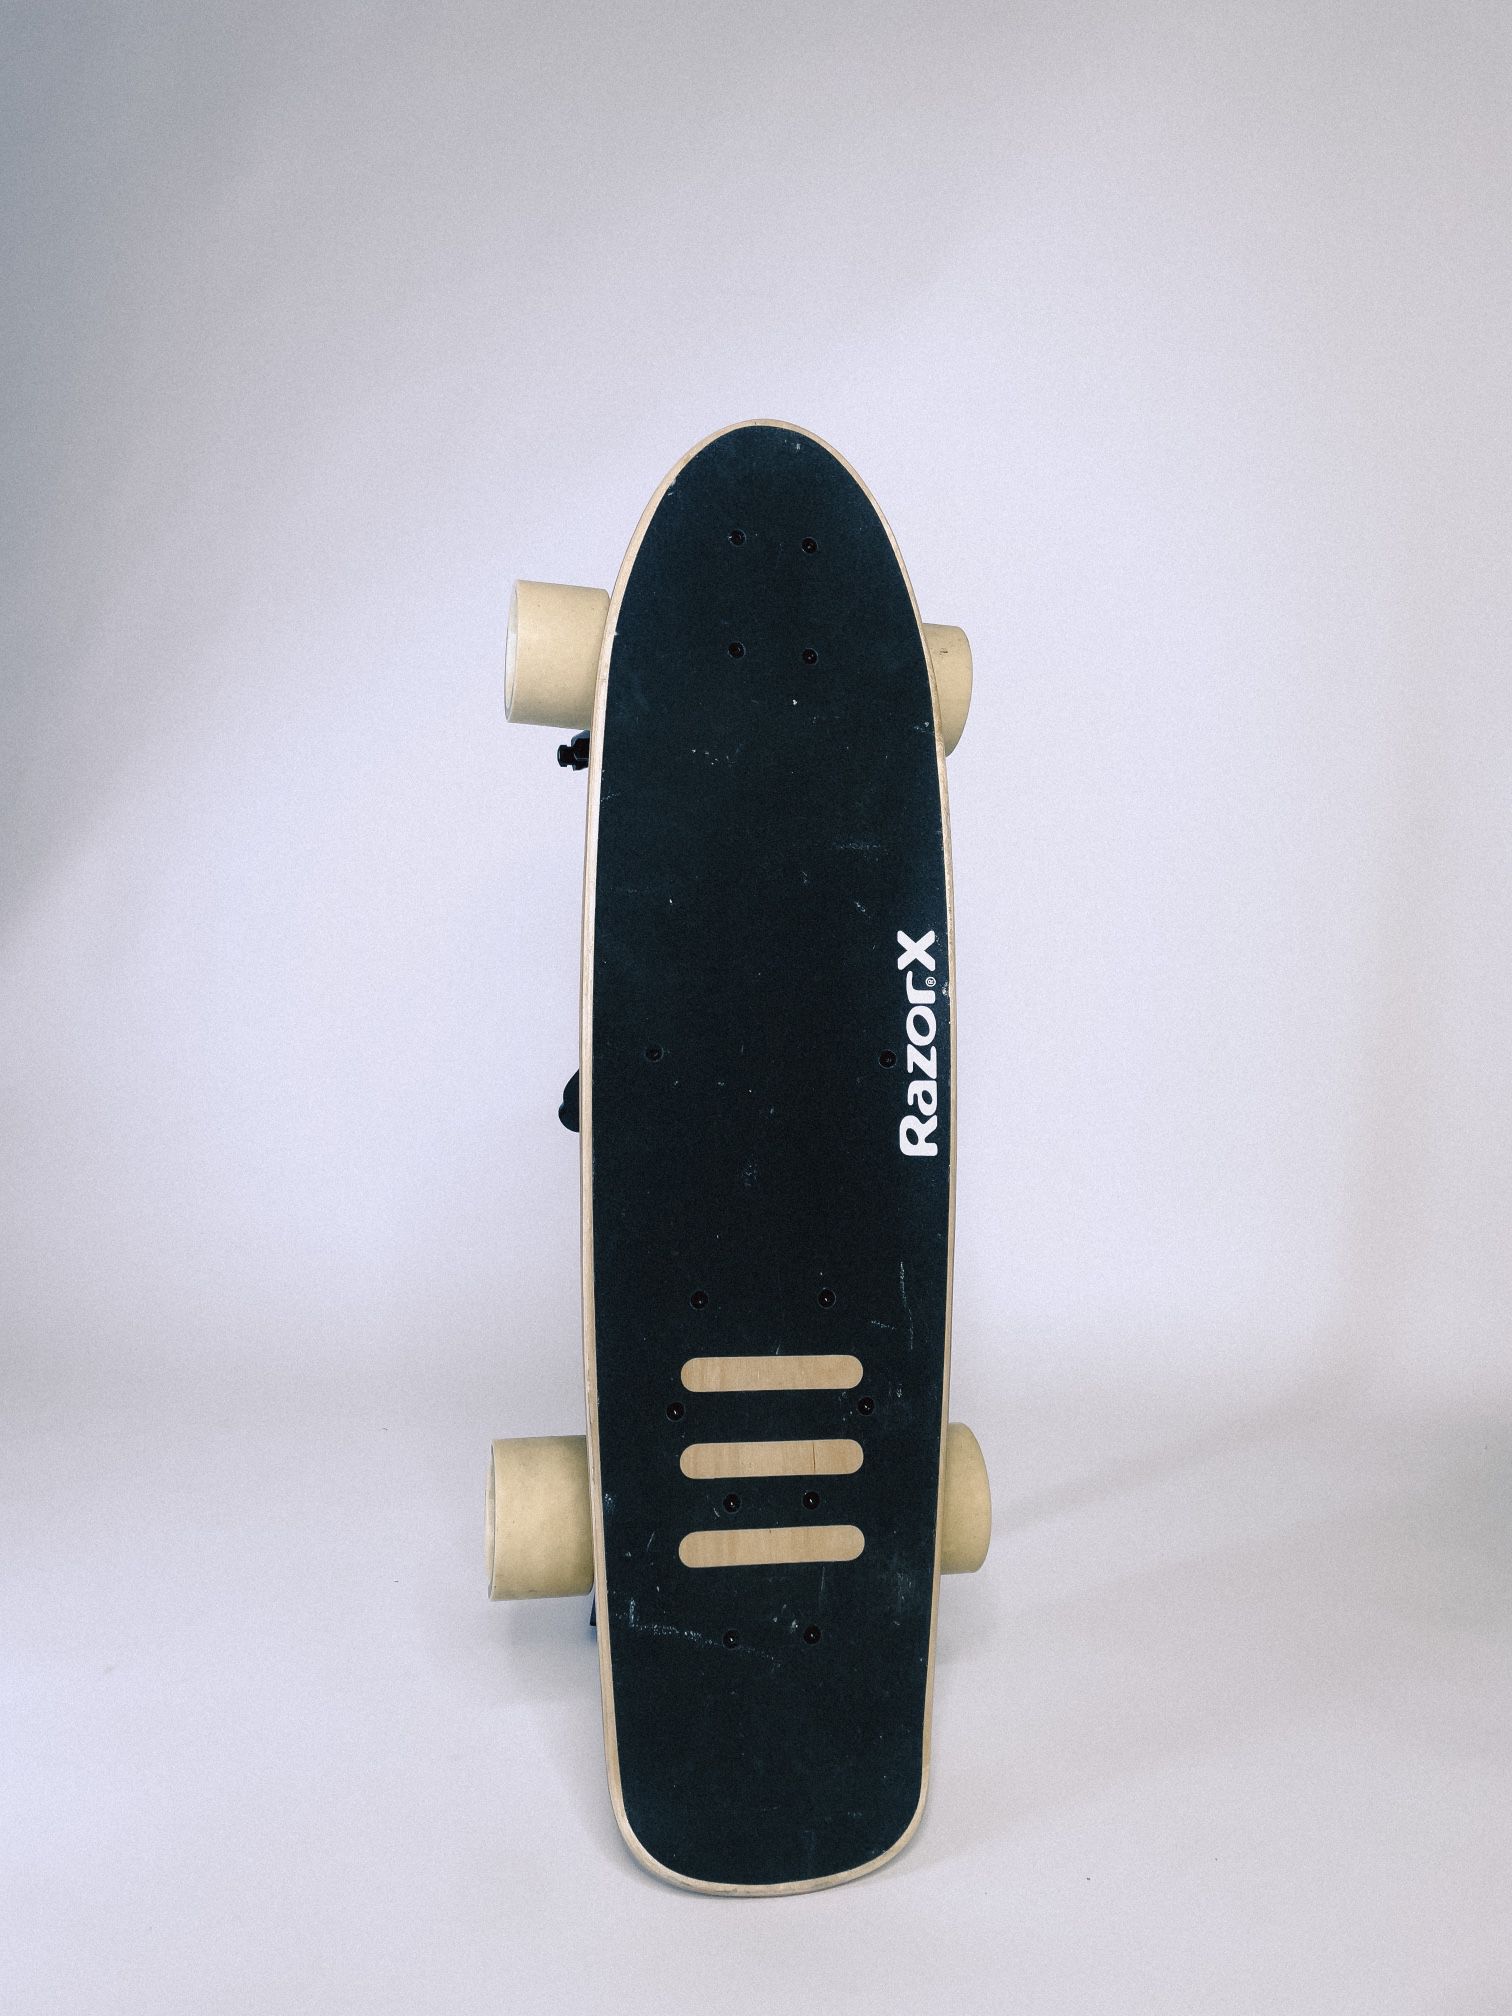 RazorX Electronic Skateboard for Sale Glendale, CA - OfferUp